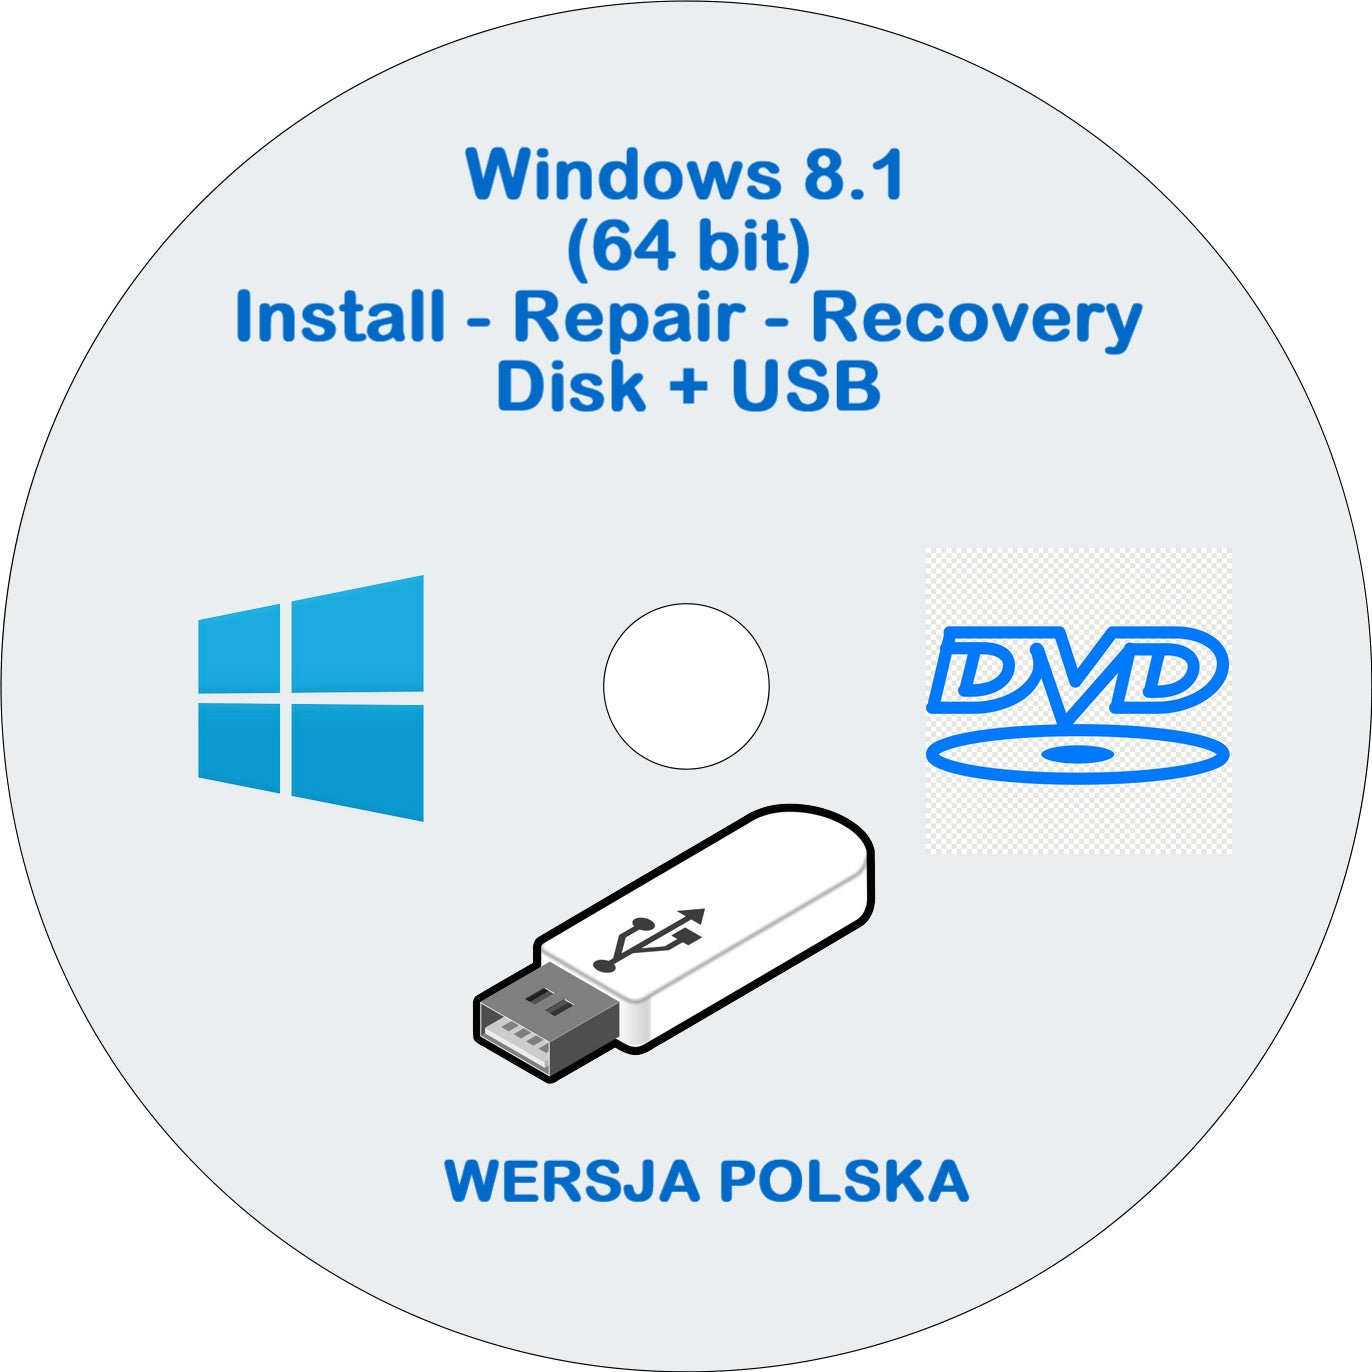 Windows 8.1 Disk + USB 64 Bit